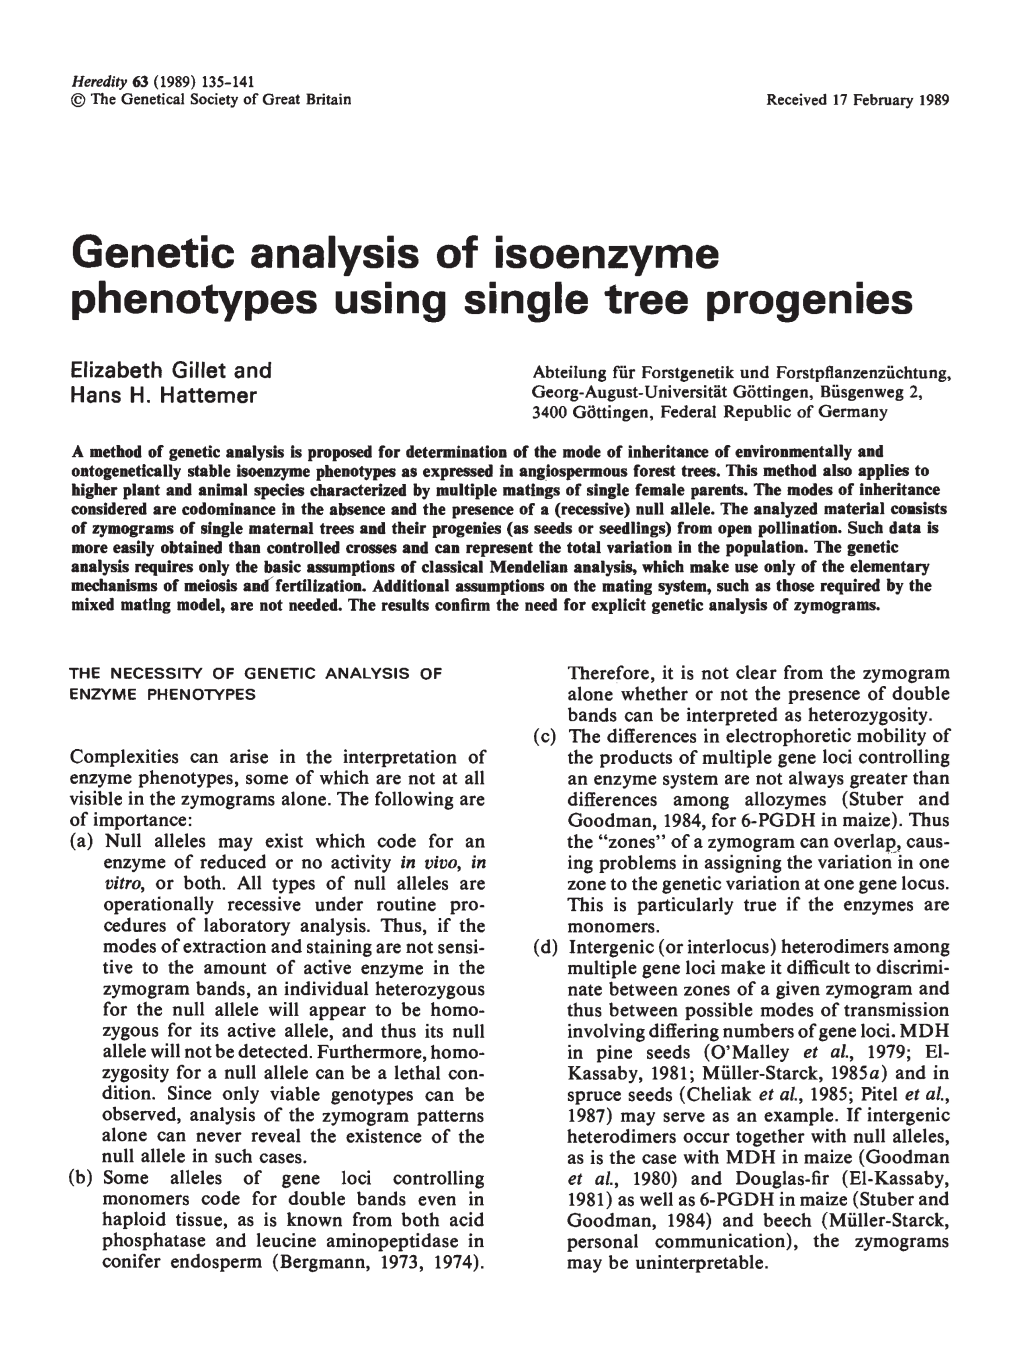 Genetic Analysis of Isoenzyme Phenotypes Using Single Tree